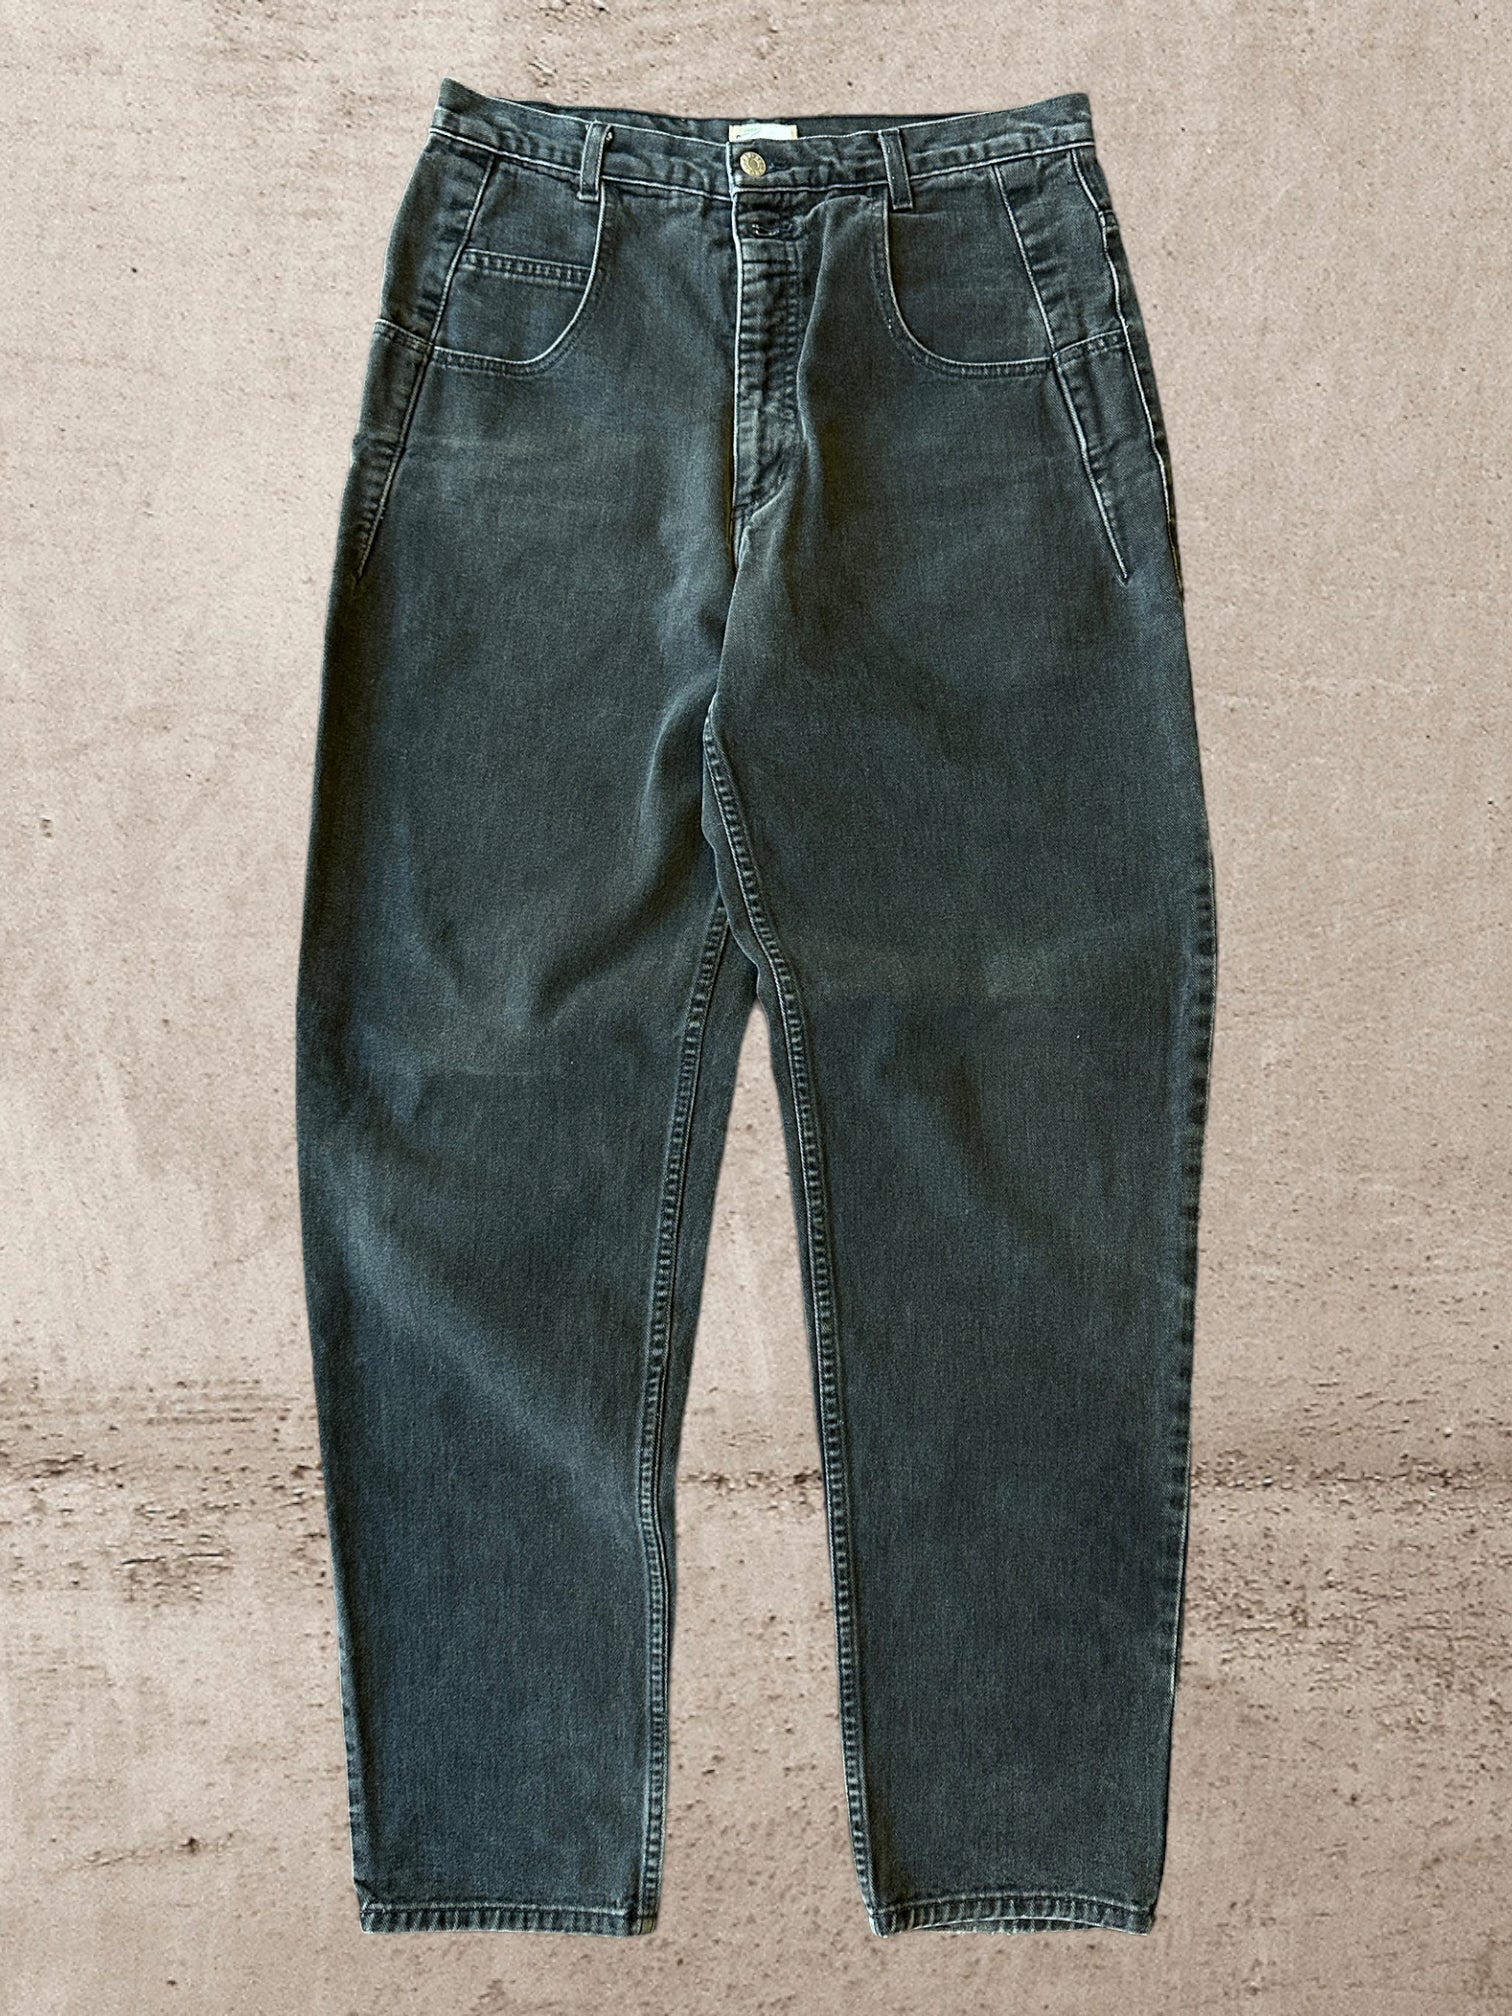 90s Black Guess Jeans - 33x33